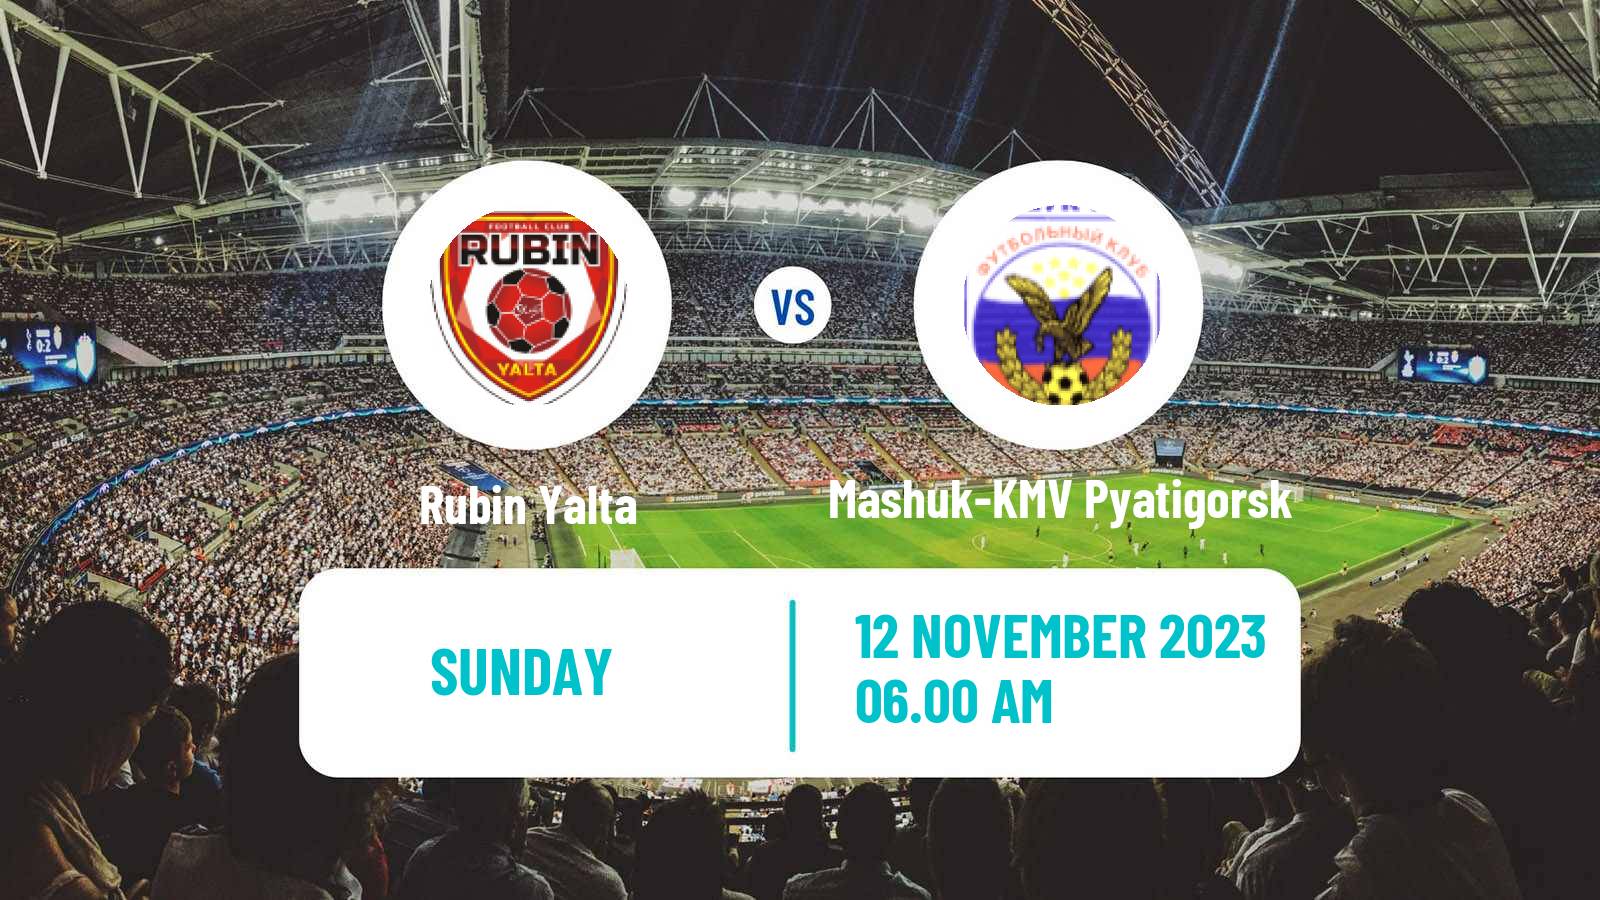 Soccer FNL 2 Division B Group 1 Rubin Yalta - Mashuk-KMV Pyatigorsk